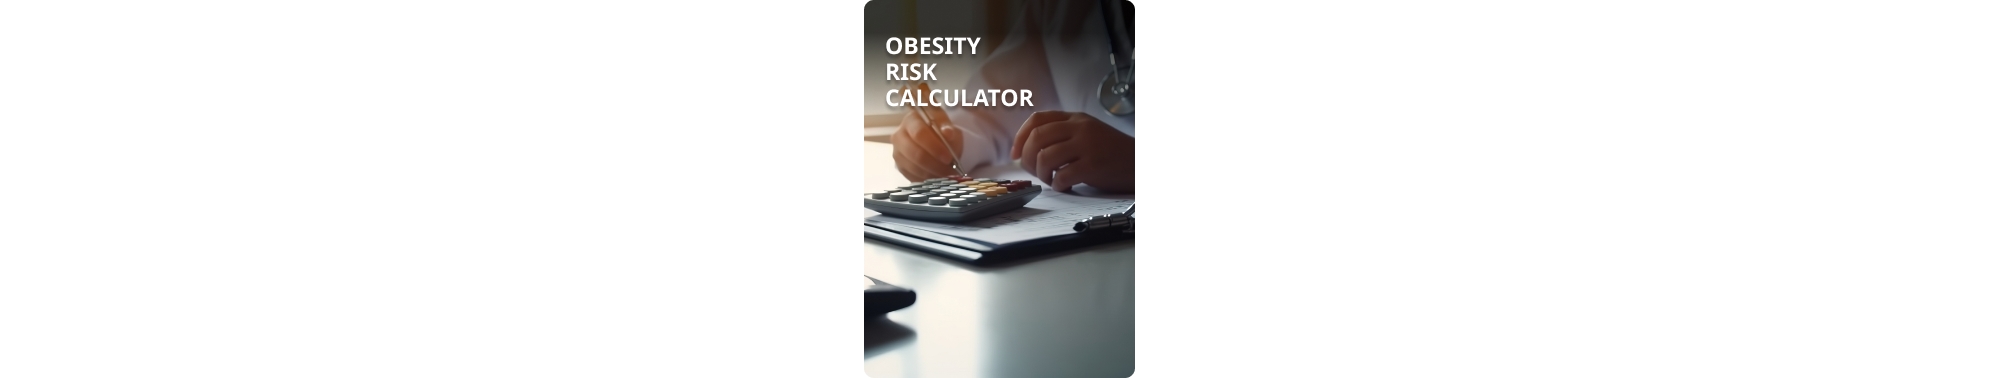 Obesity Risk Calculator